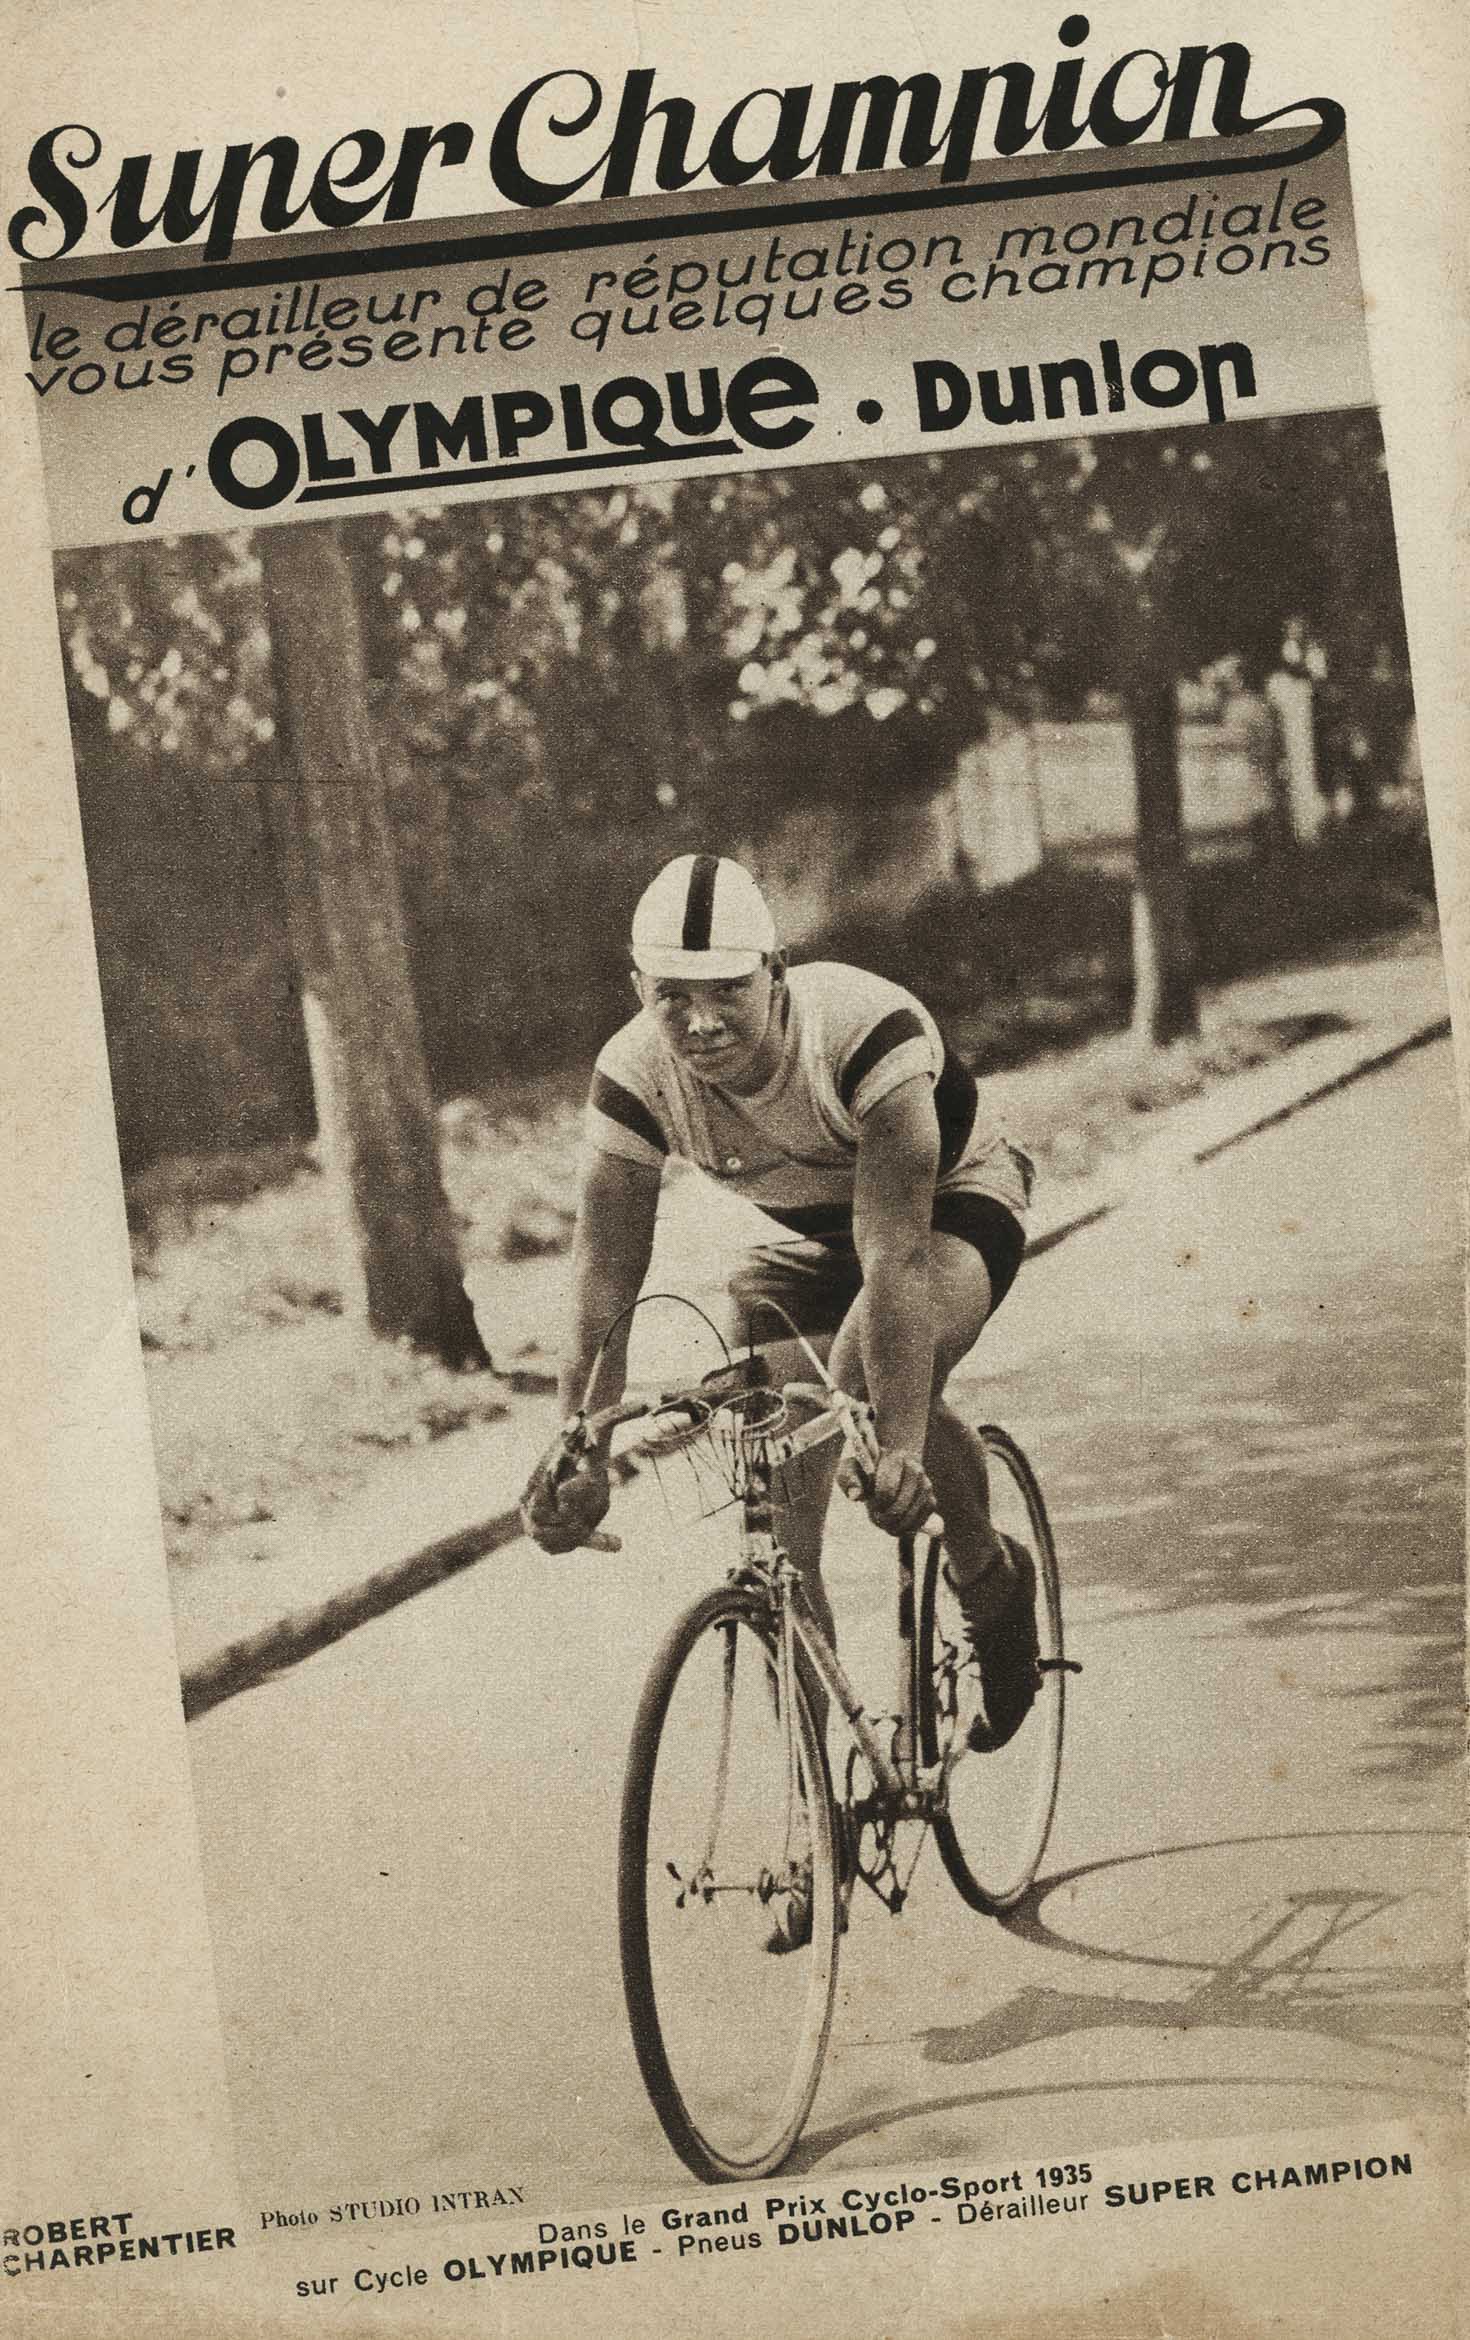 Super Champion - Olympique leaflet 1936 scan 1 main image